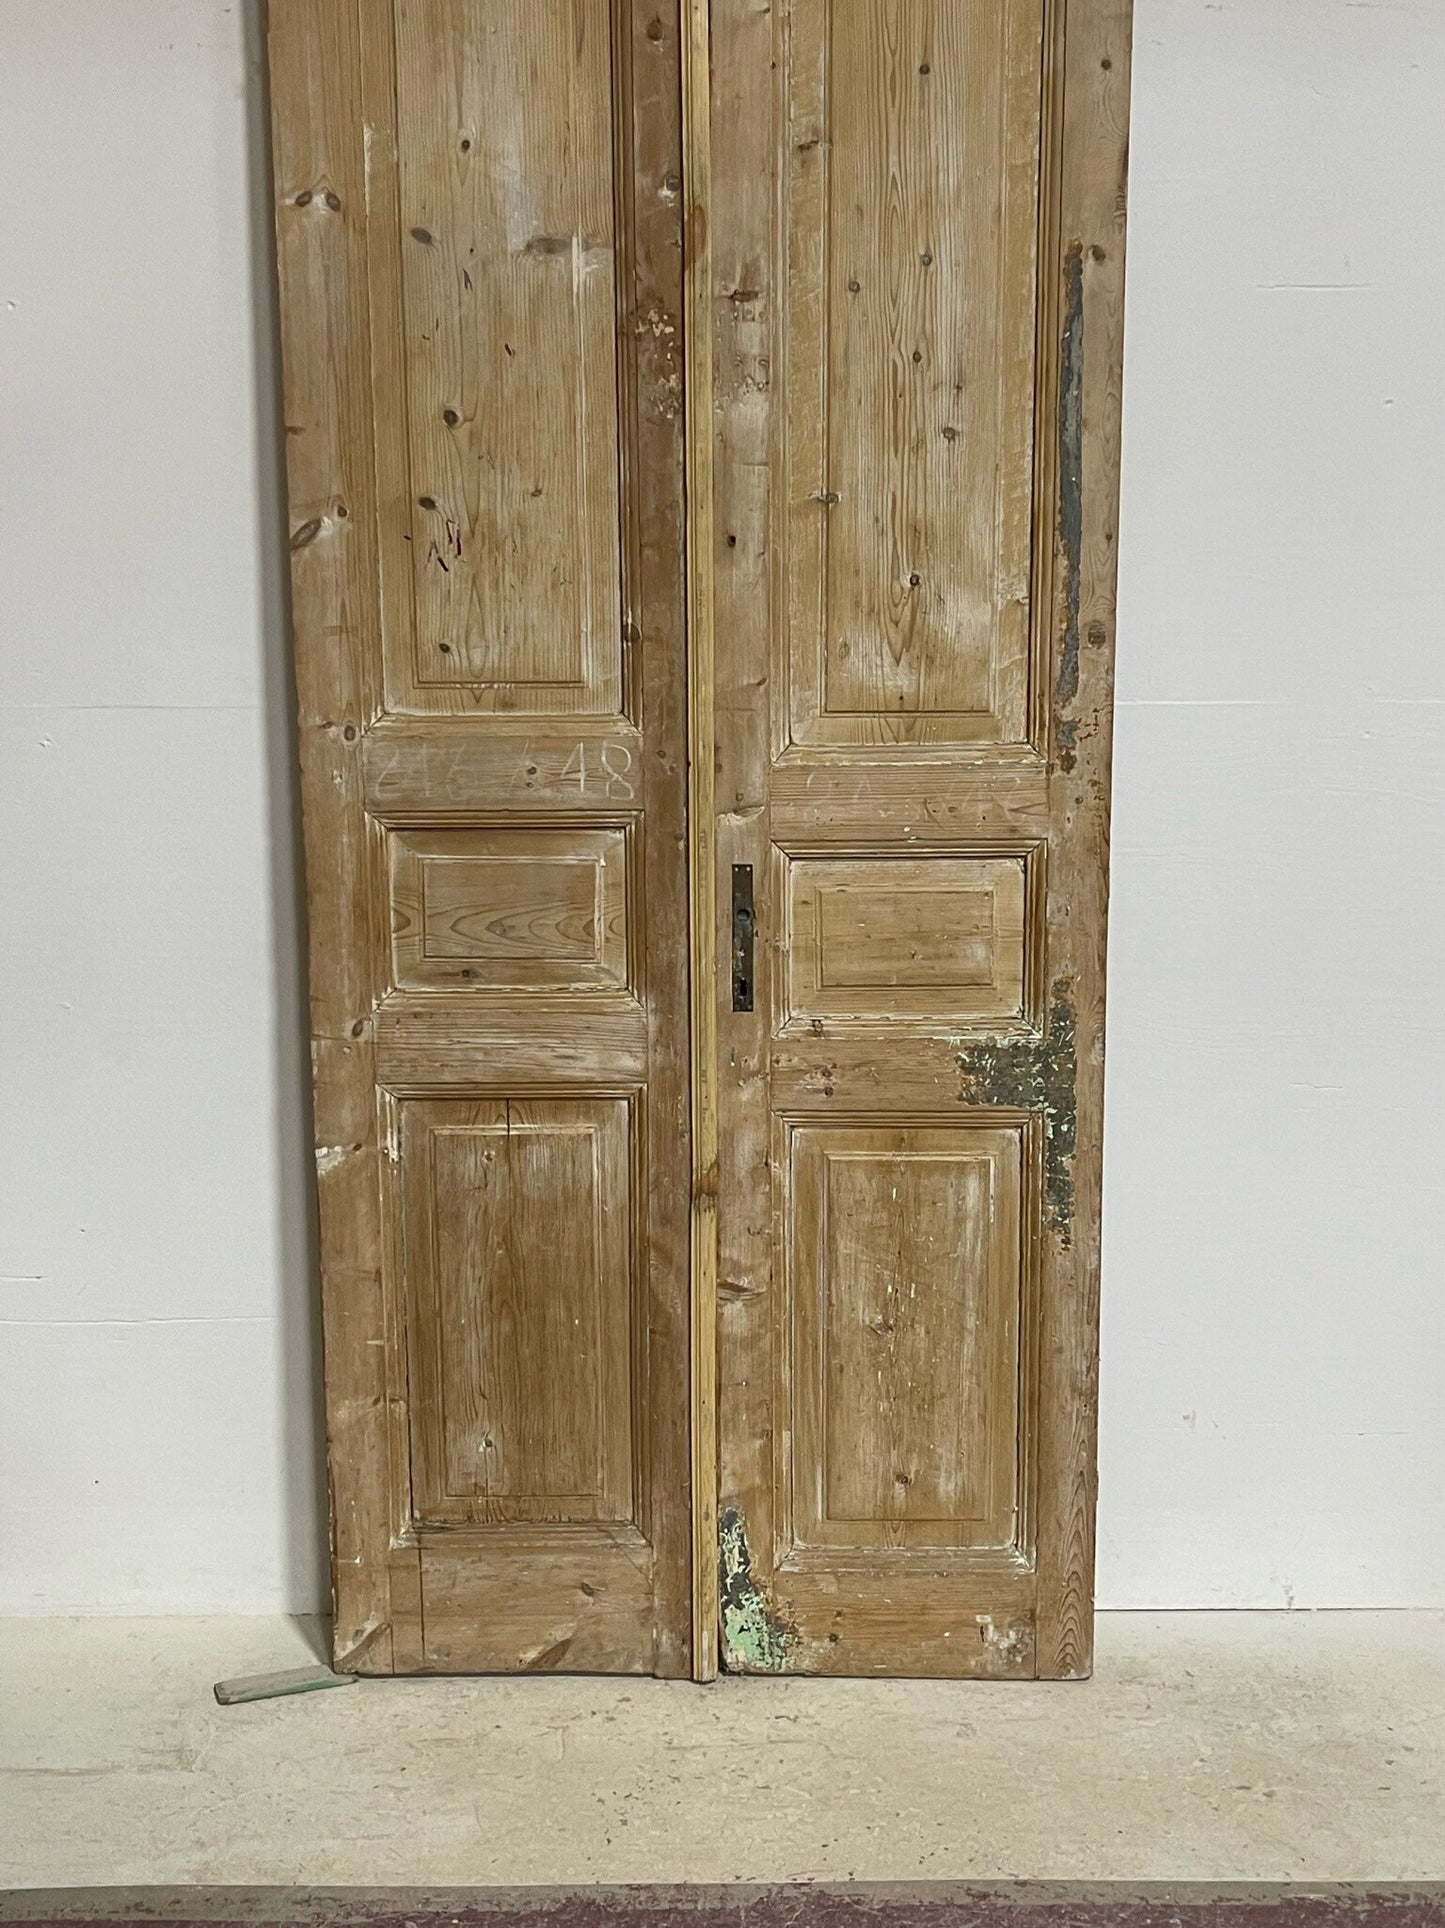 Antique French doors (96X38) G0163